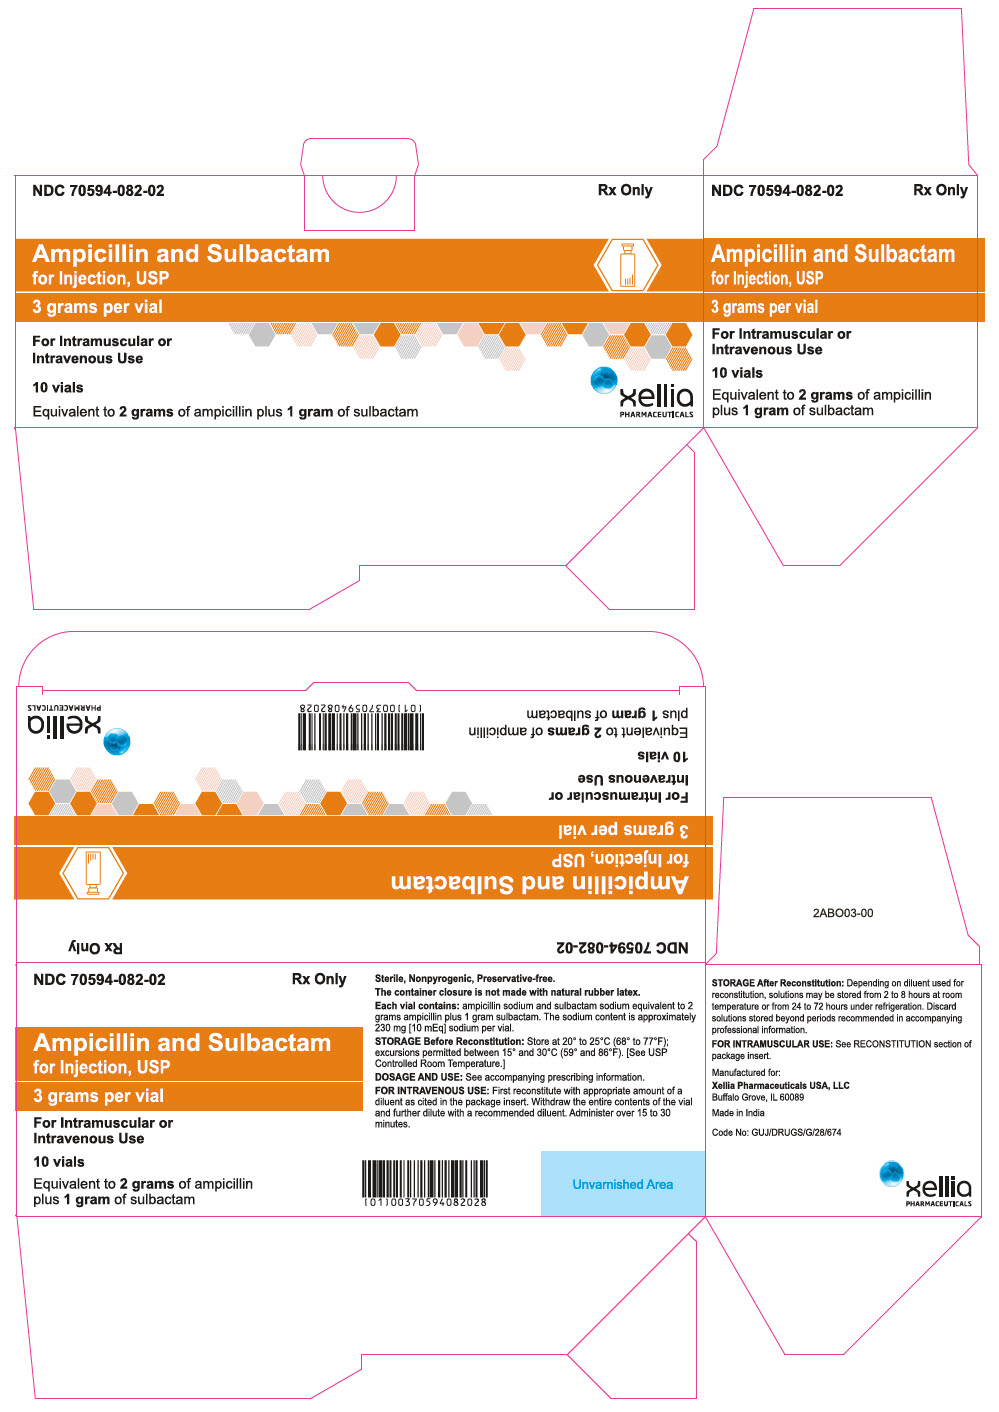 PRINCIPAL DISPLAY PANEL - 3 gram Vial Carton